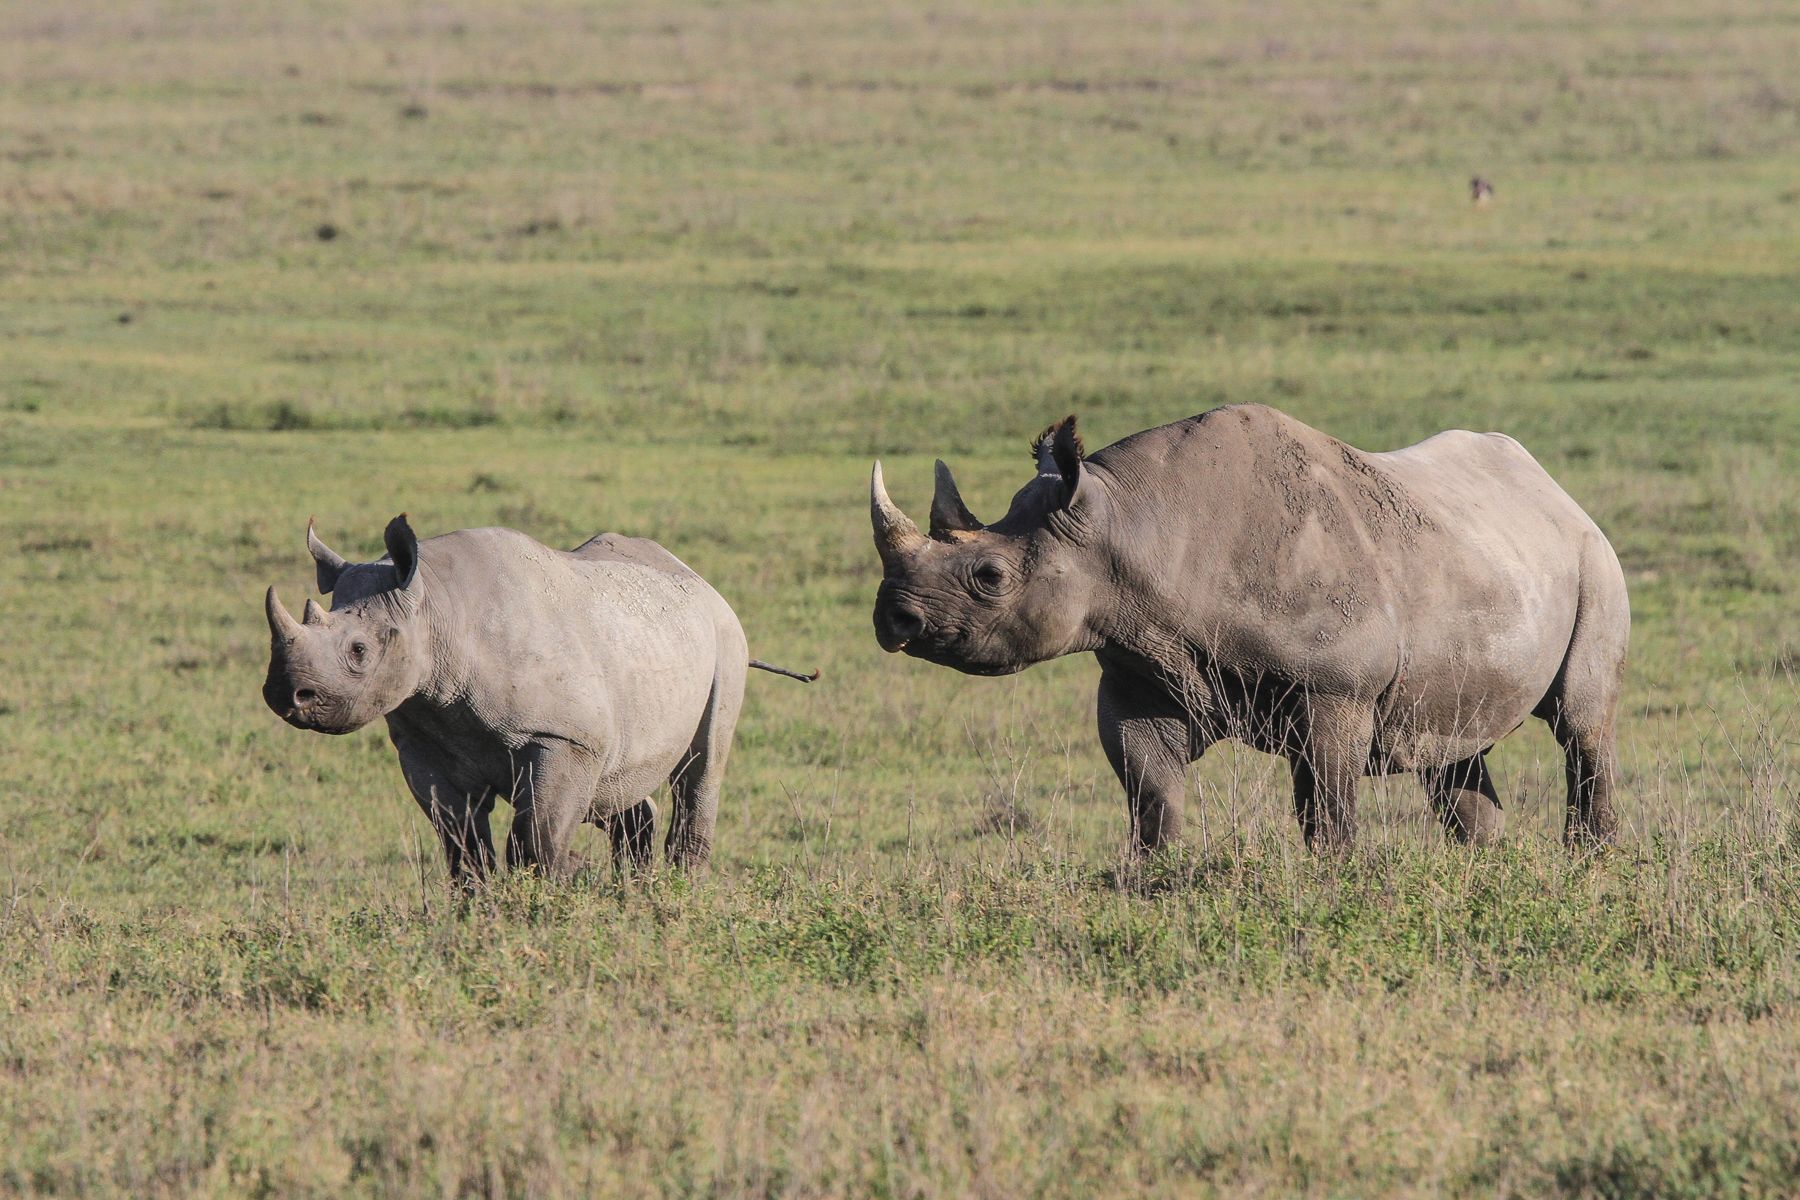 Black Rhinoceroses still survive here for the same reason